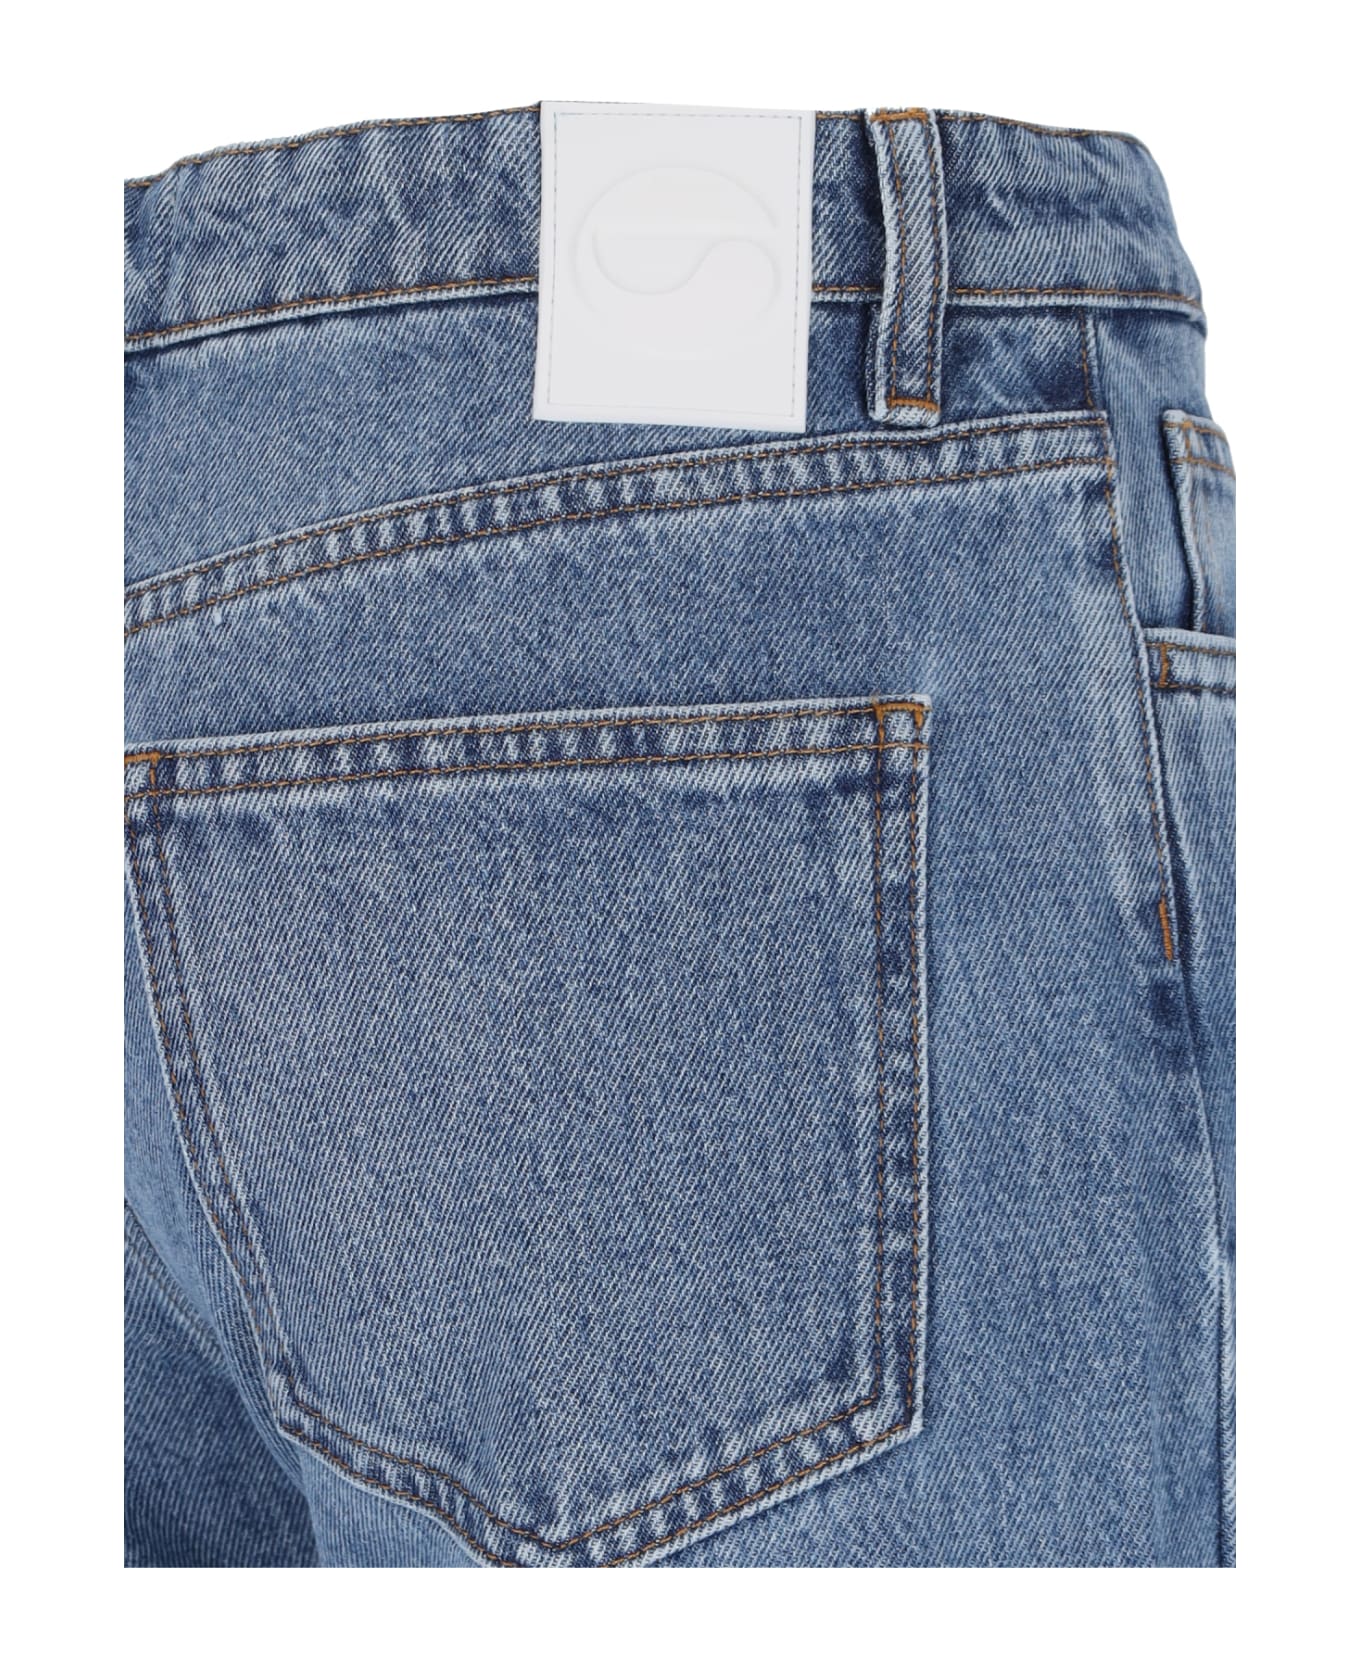 Coperni 'open Knee' Jeans - WASHED BLUE